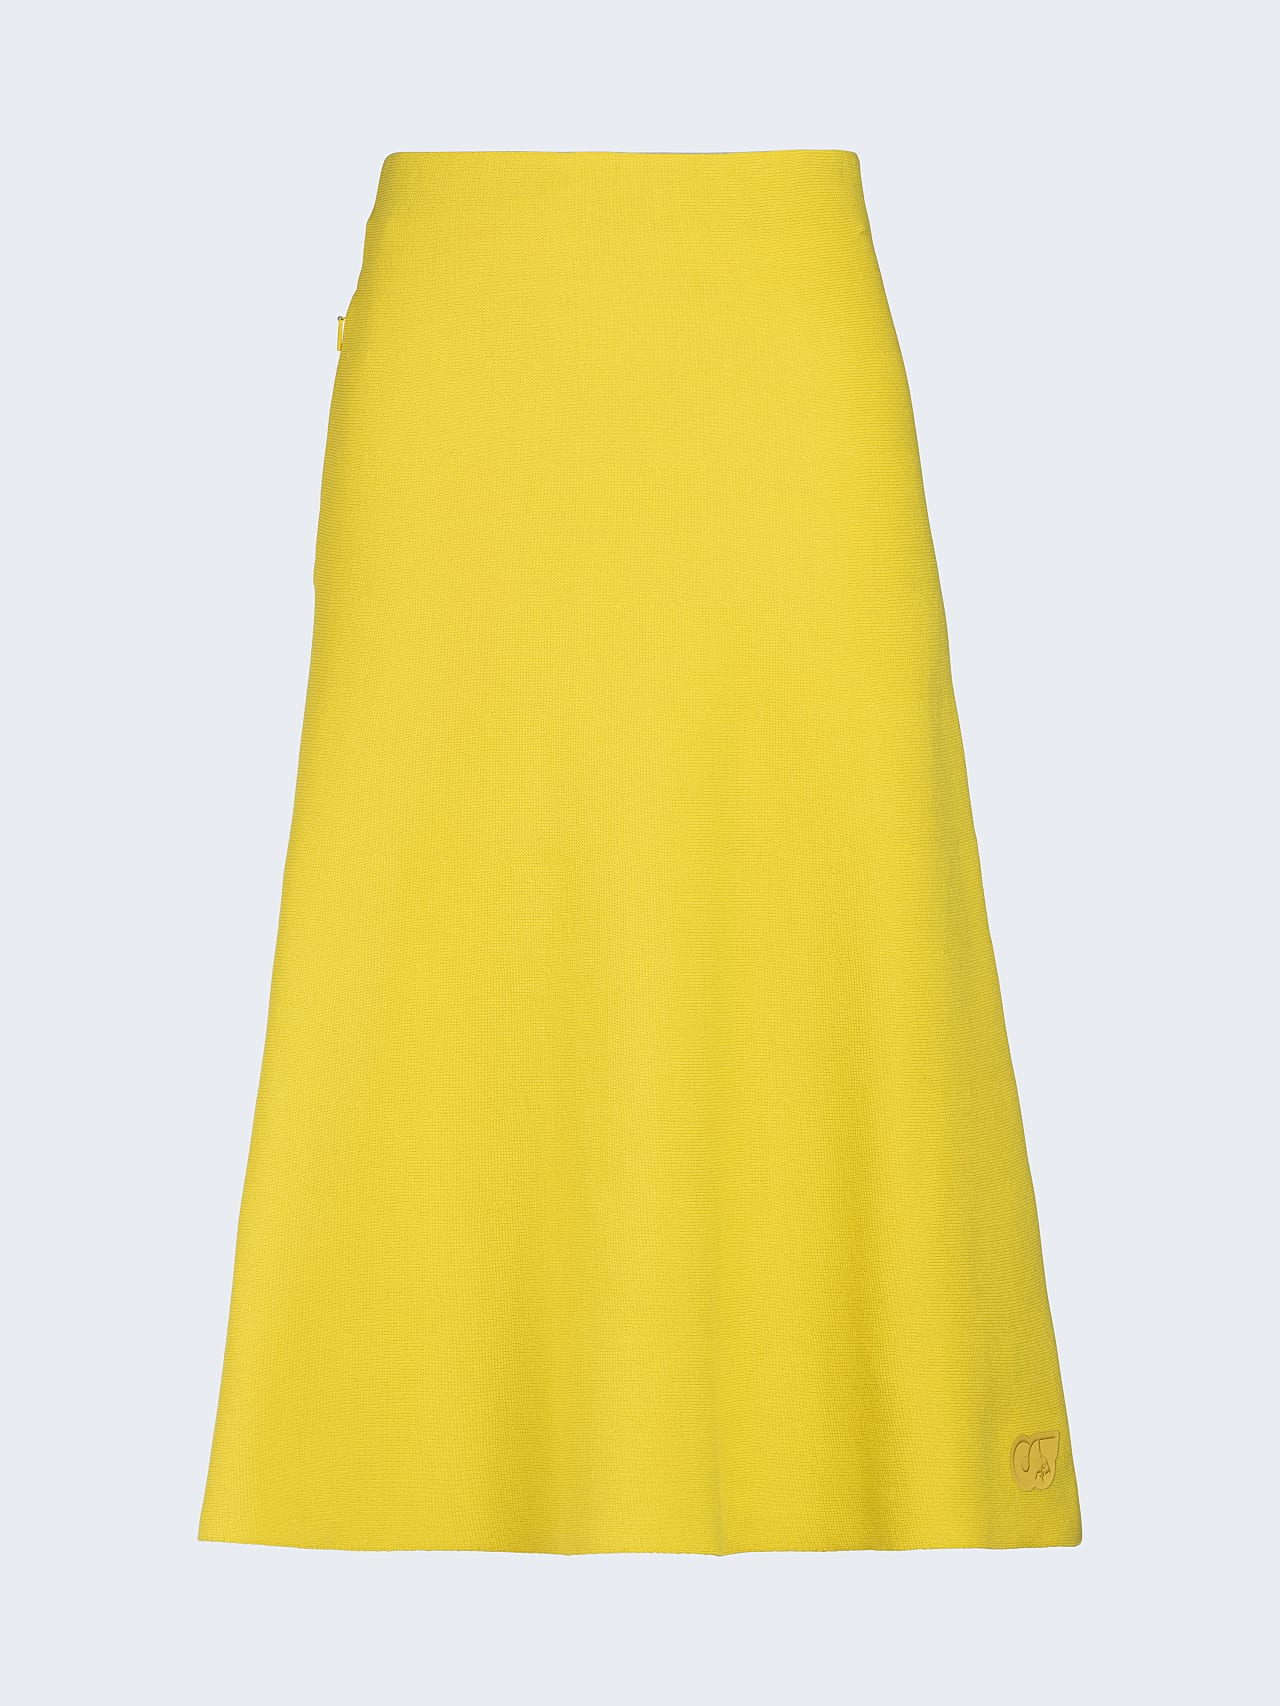 AlphaTauri | PAITA V1.Y6.01 | Flared Knit Skirt in yellow for Women